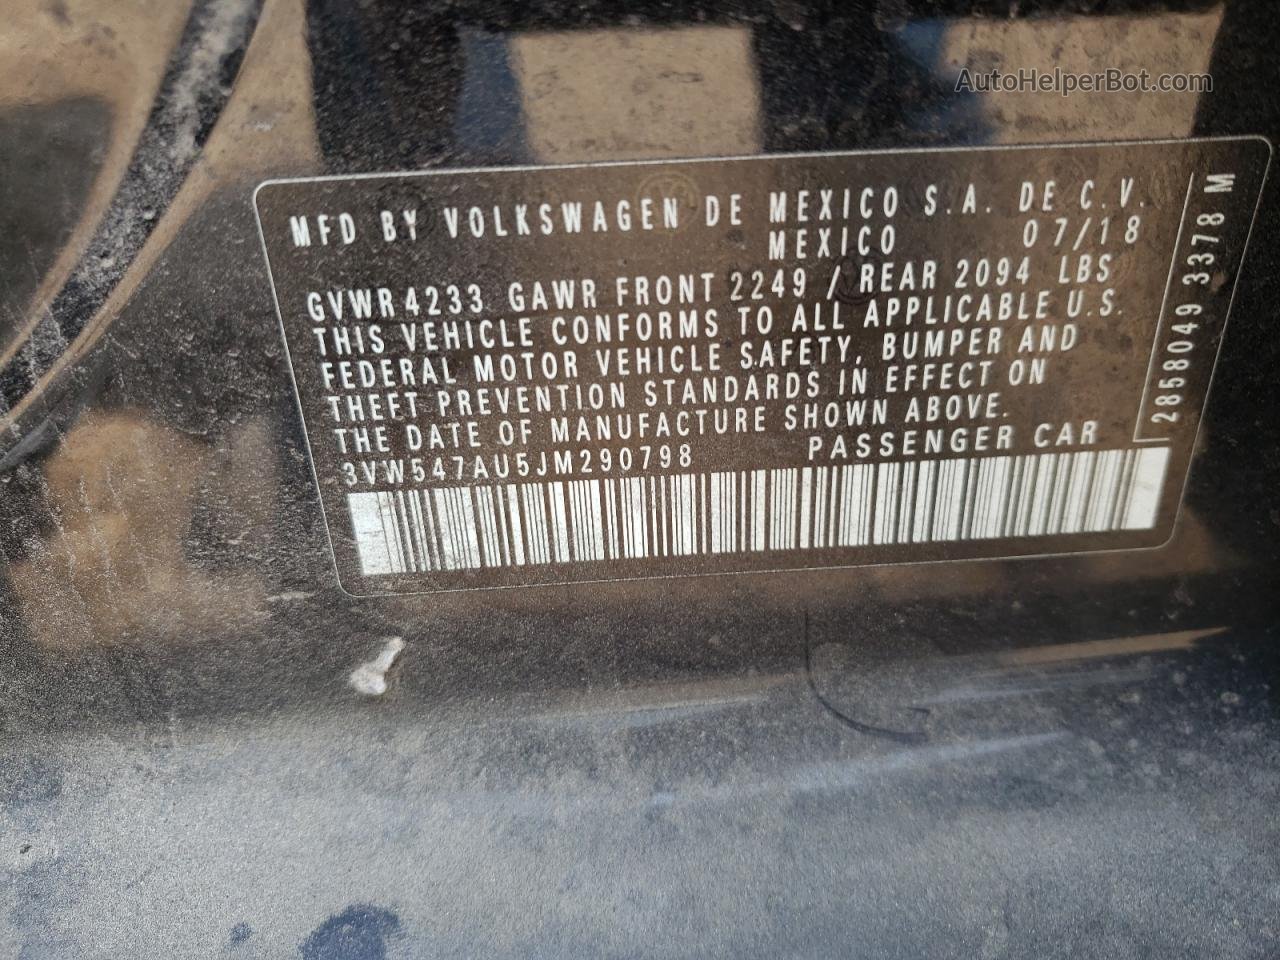 2018 Volkswagen Gti S Black vin: 3VW547AU5JM290798